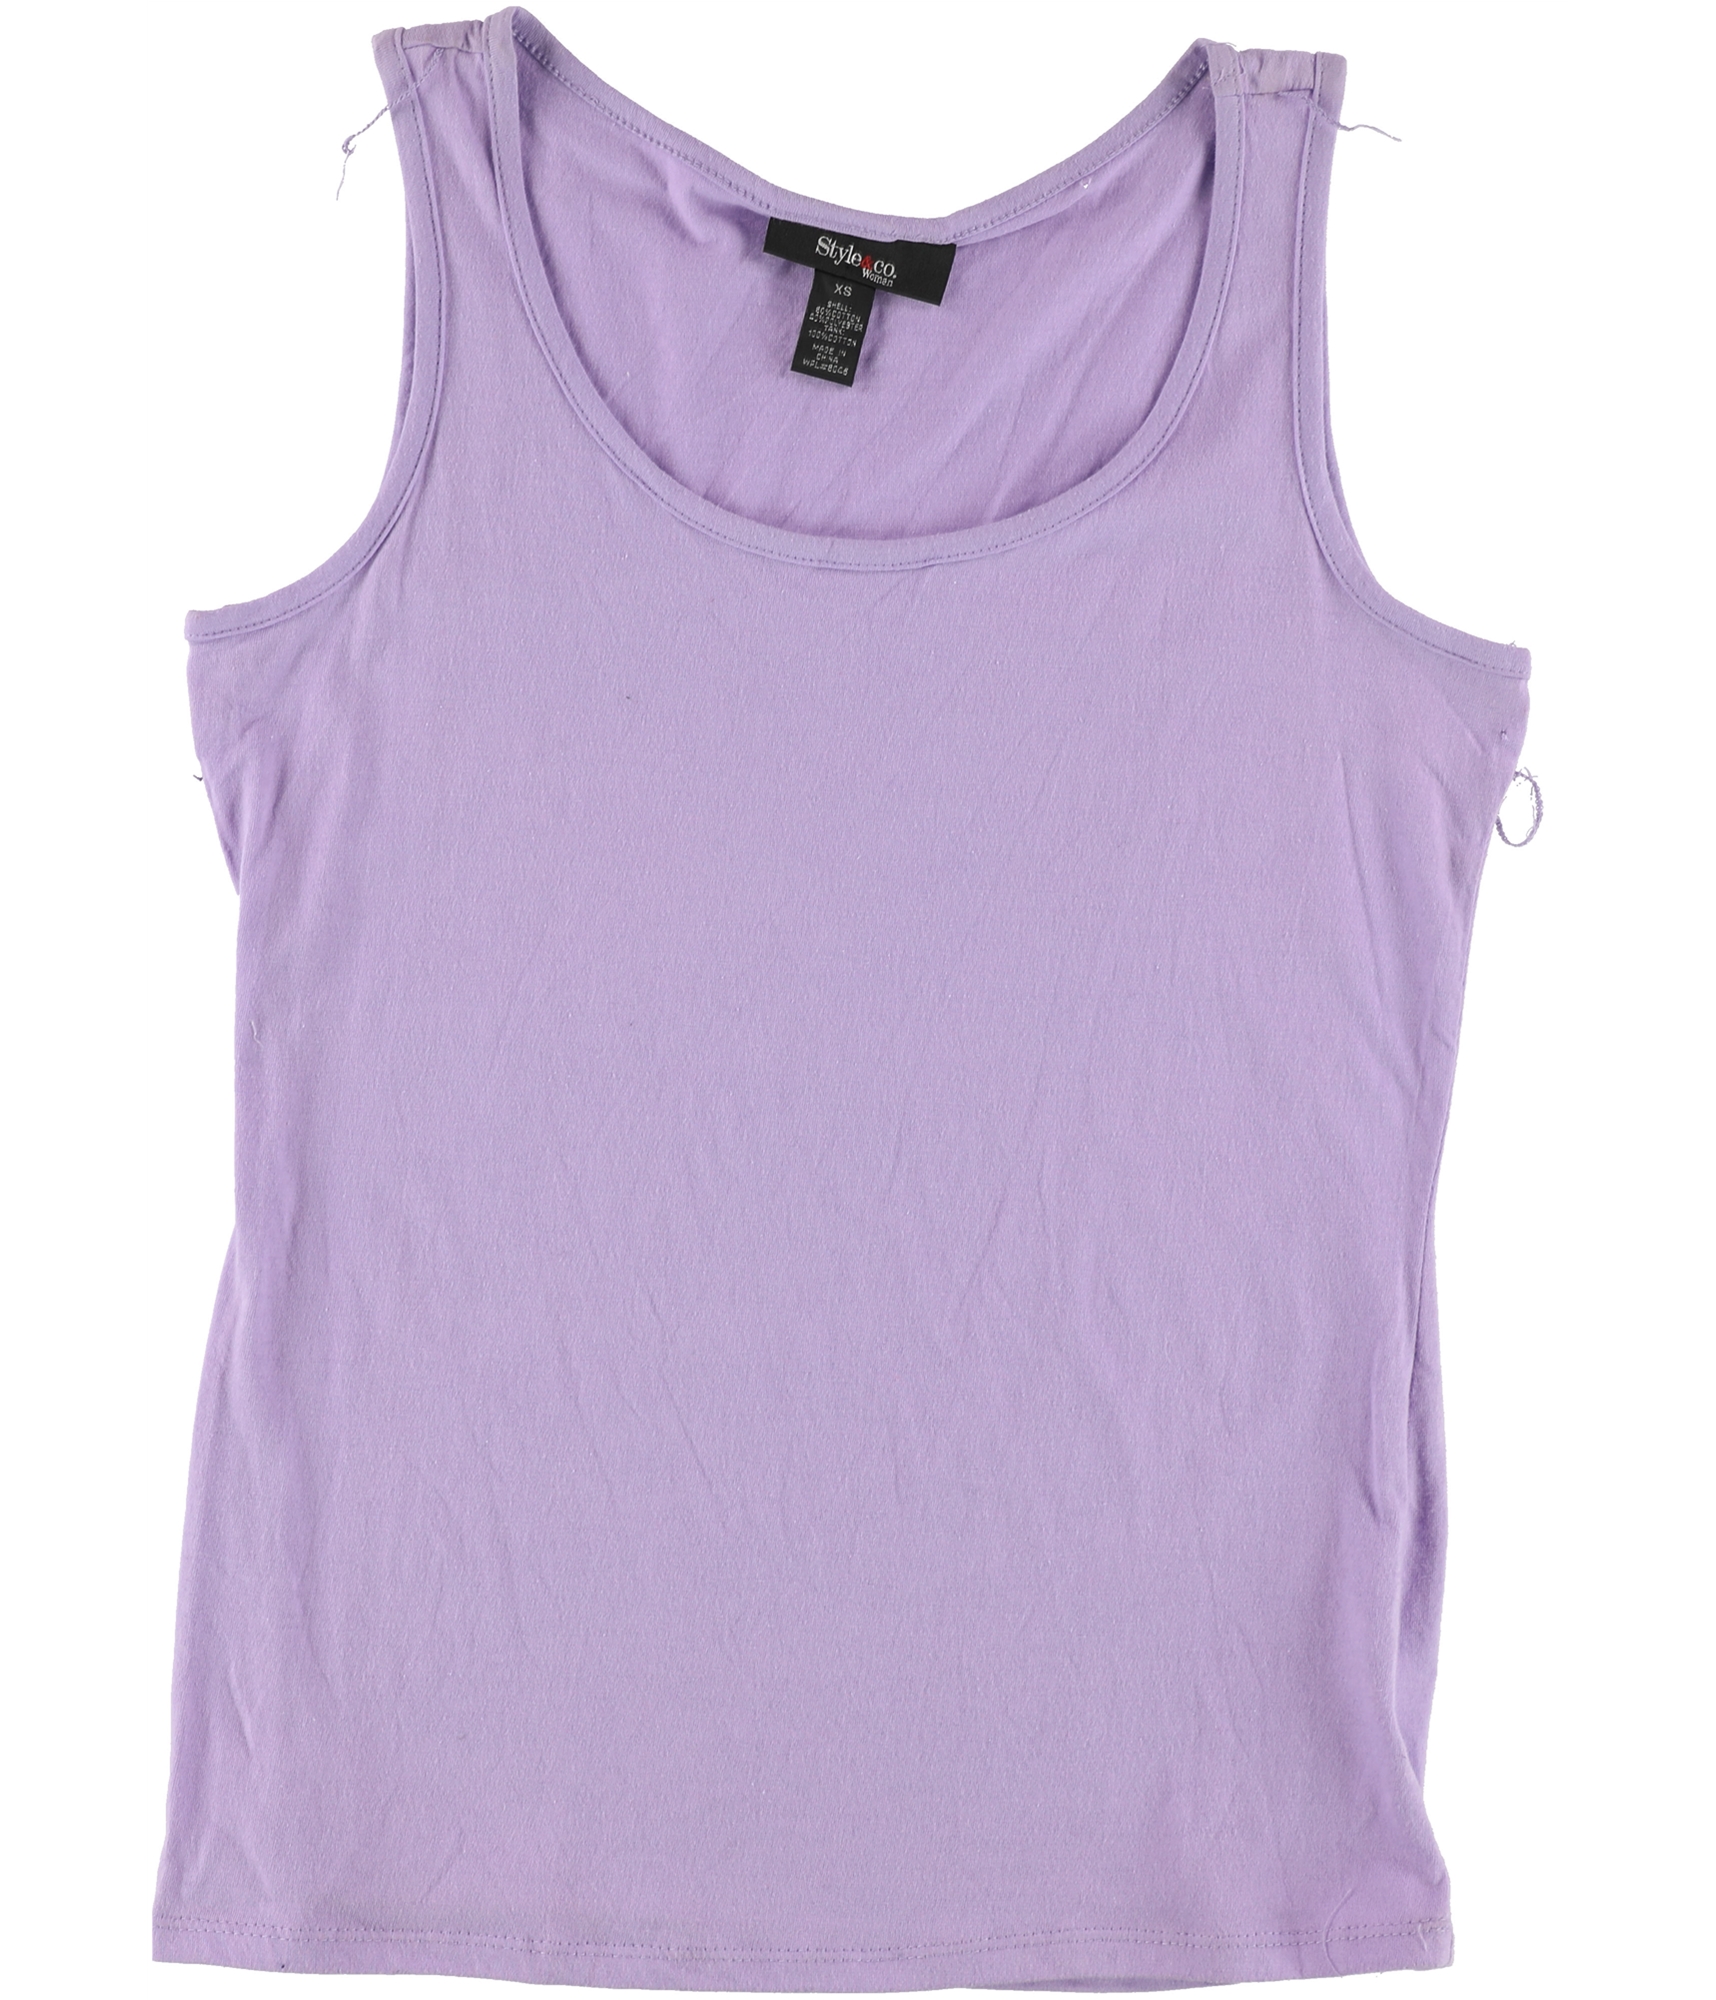 Style & Co. Womens Basic Tank Top, Purple, X-Small | eBay